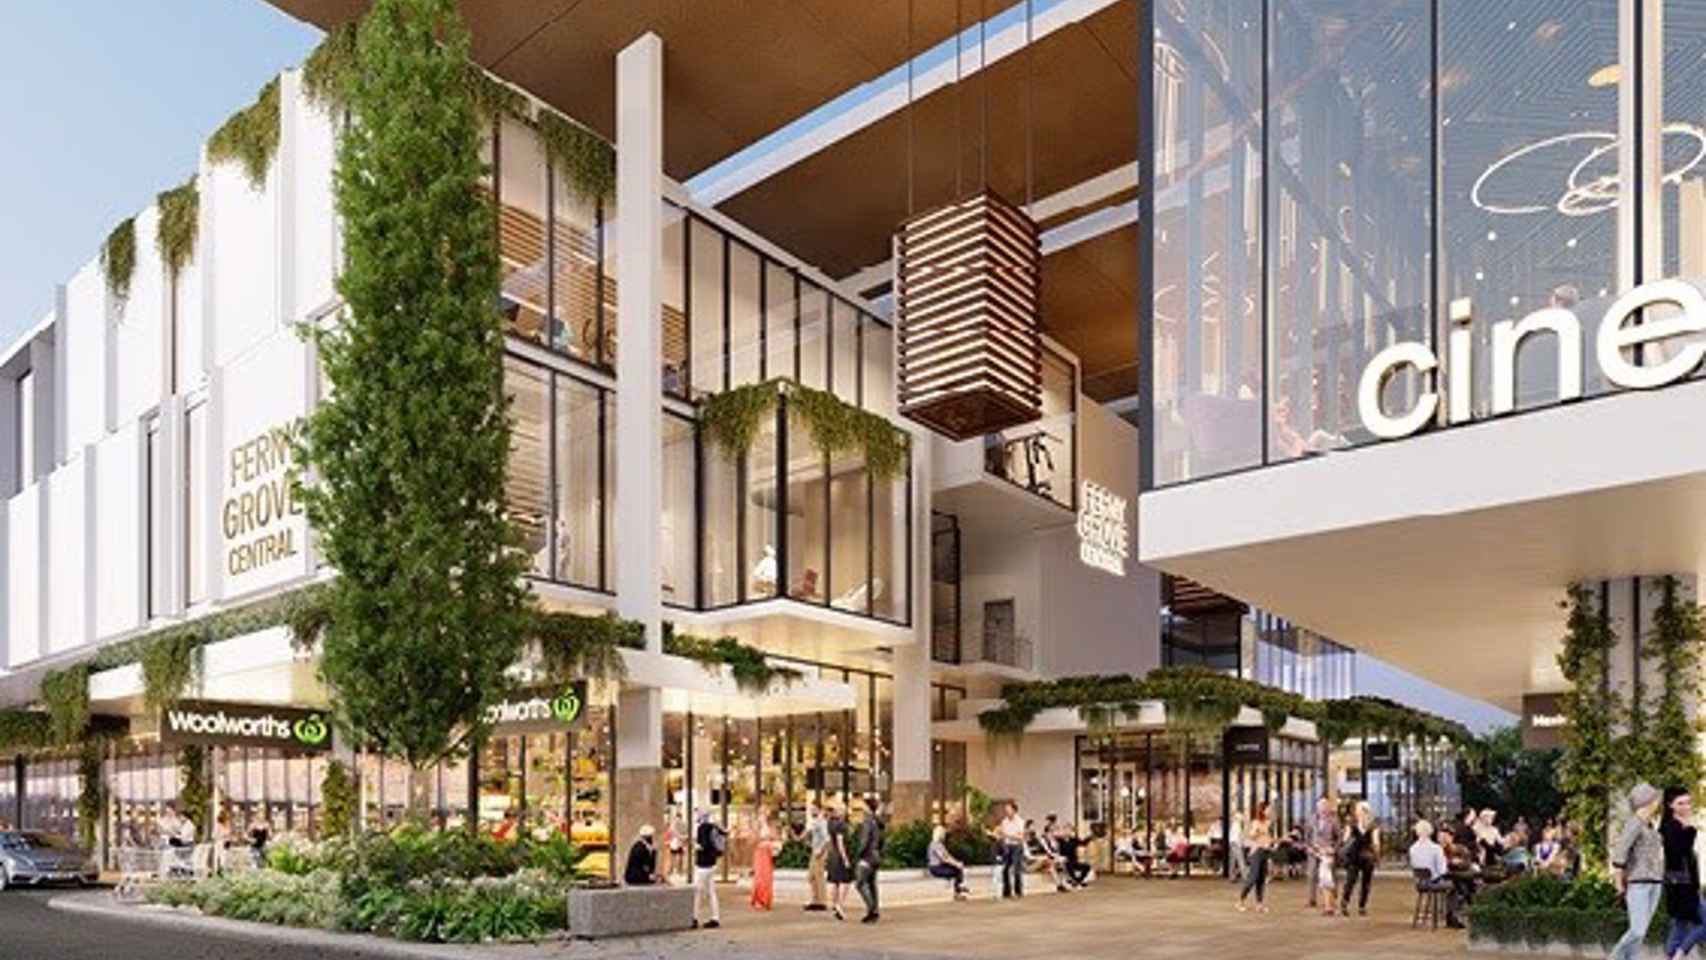 Cimic (ACS) construirá un centro residencial y de ocio en Australia por 65 millones de euros